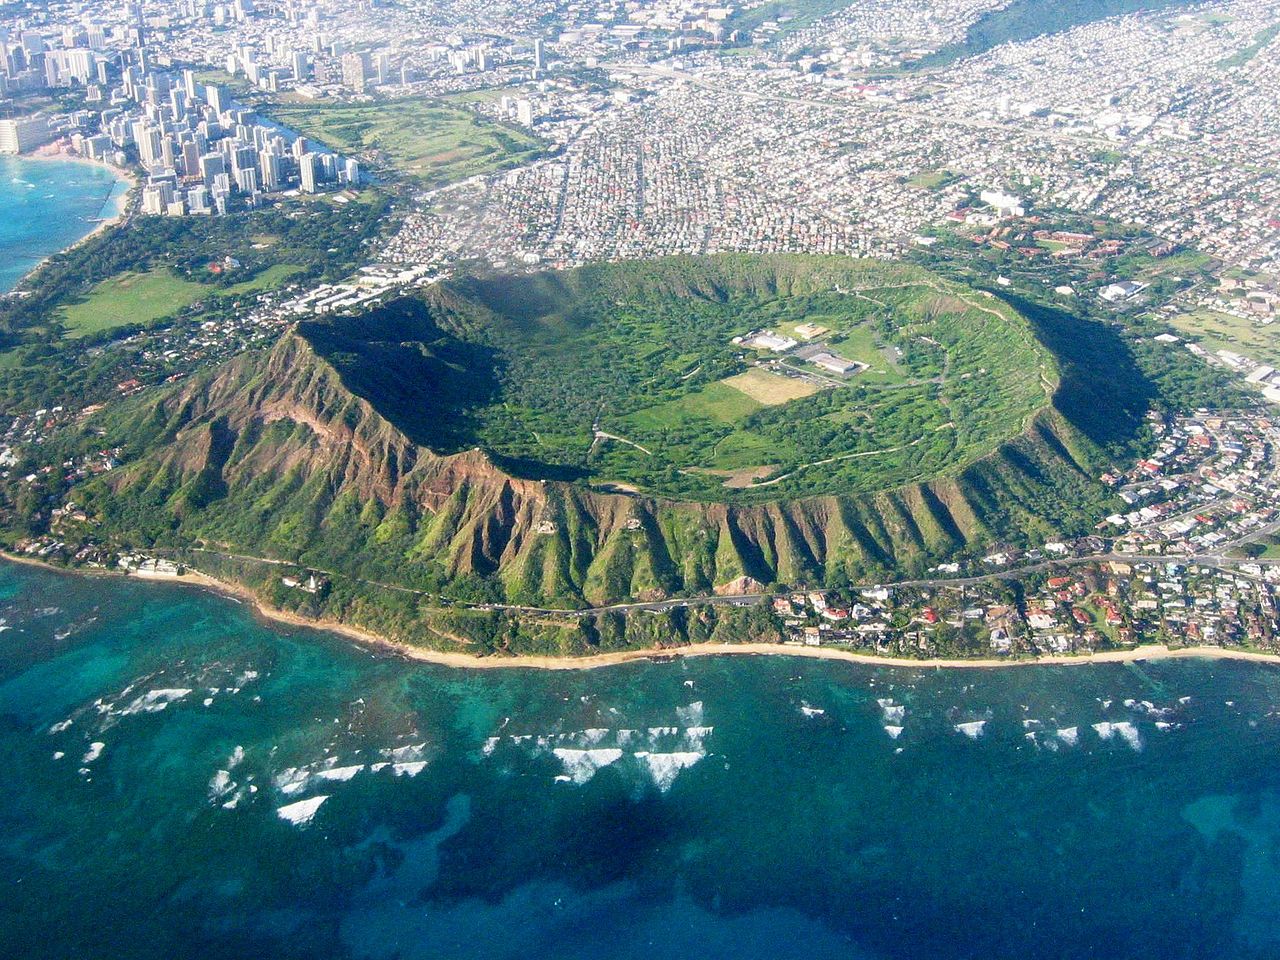 1280px-Head_East_Aerial_View%2C_Waikiki_and_Honolulu_Hawaii%2C_Summer%2C_Winter_%E2%89%A1_Eric_Tessmer%2C_Molokai%2C_Hawaii_-_panoramio.jpg